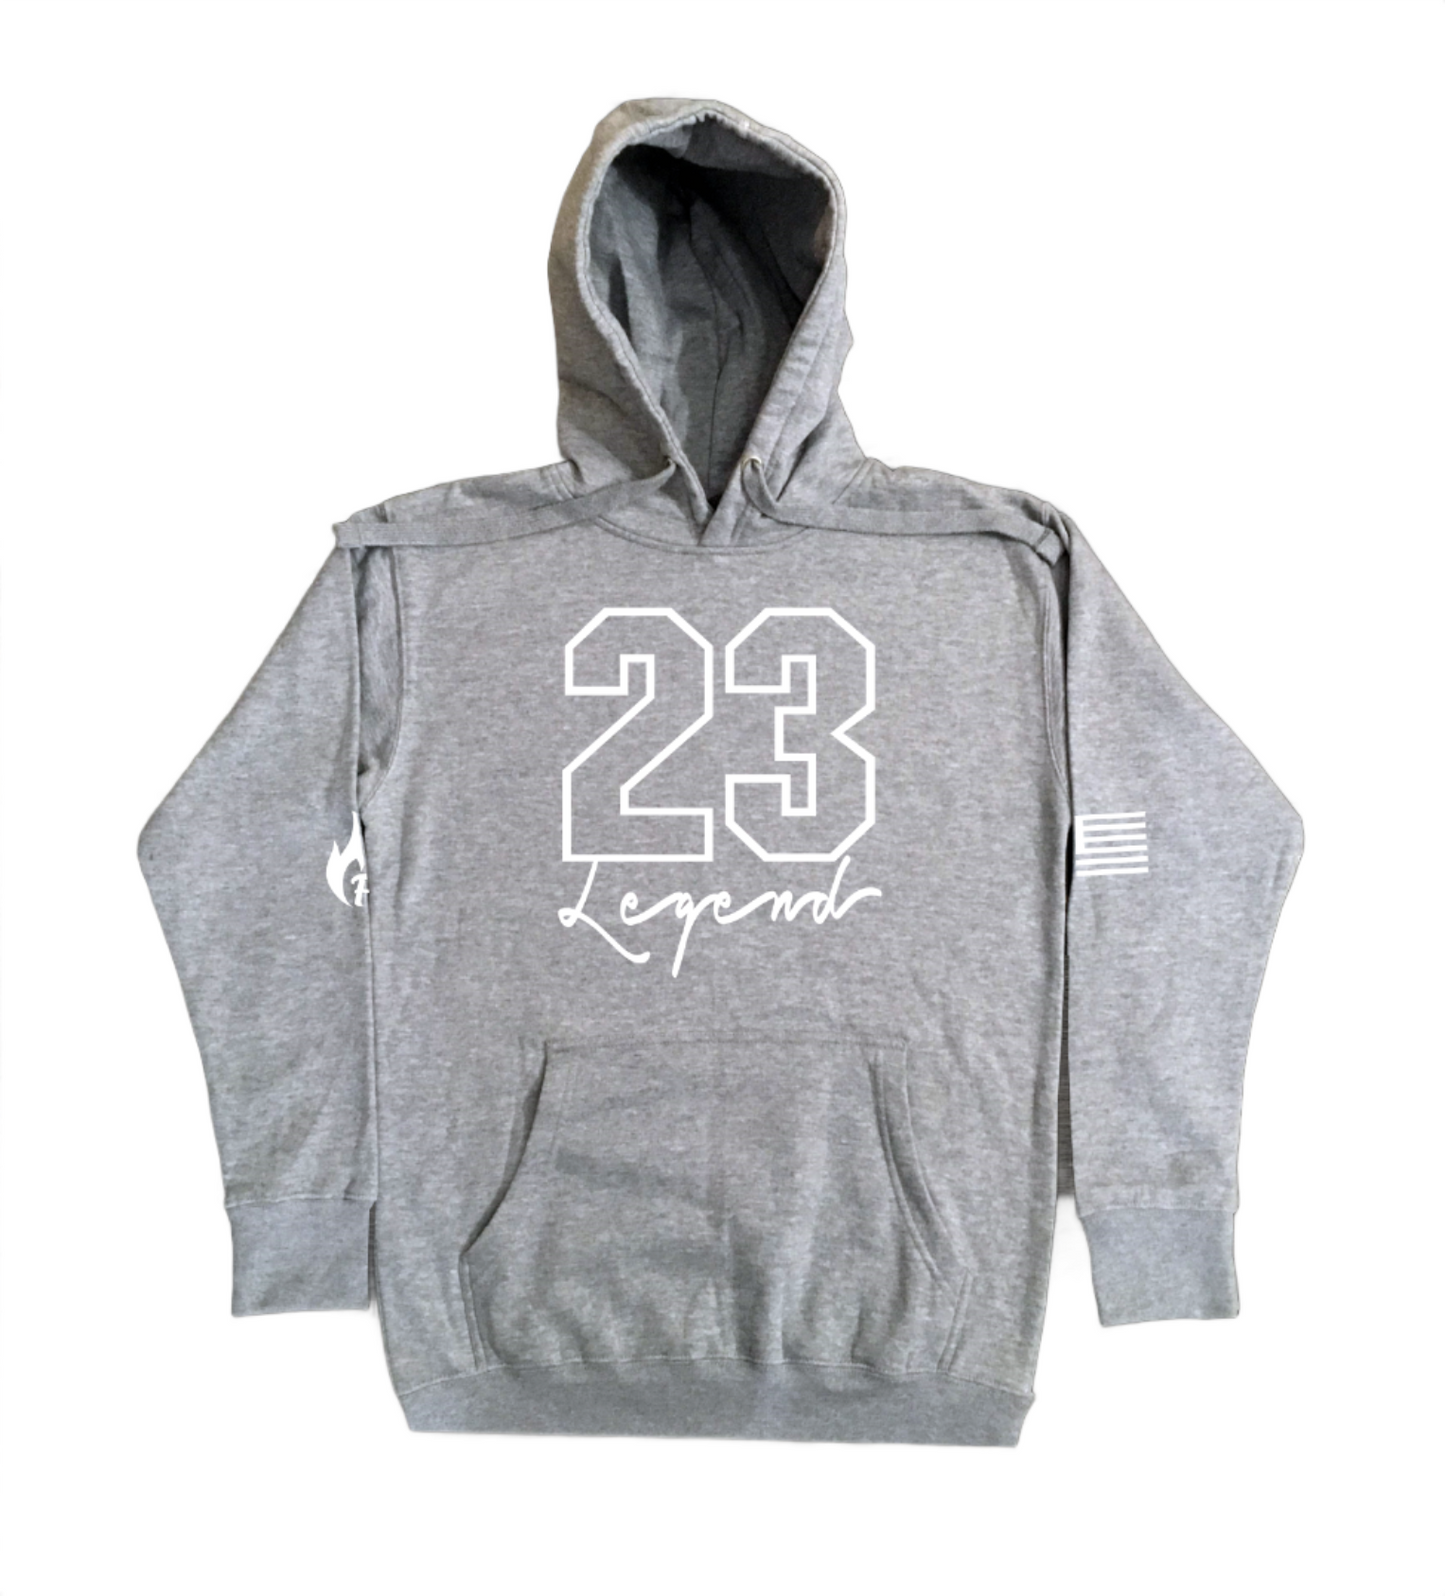 Men's Gray 23 Legend Sneaker Sweatsuit To Match Air Jordan Retro 11 Cool Grey Sneaker Hoodie Joggers Set